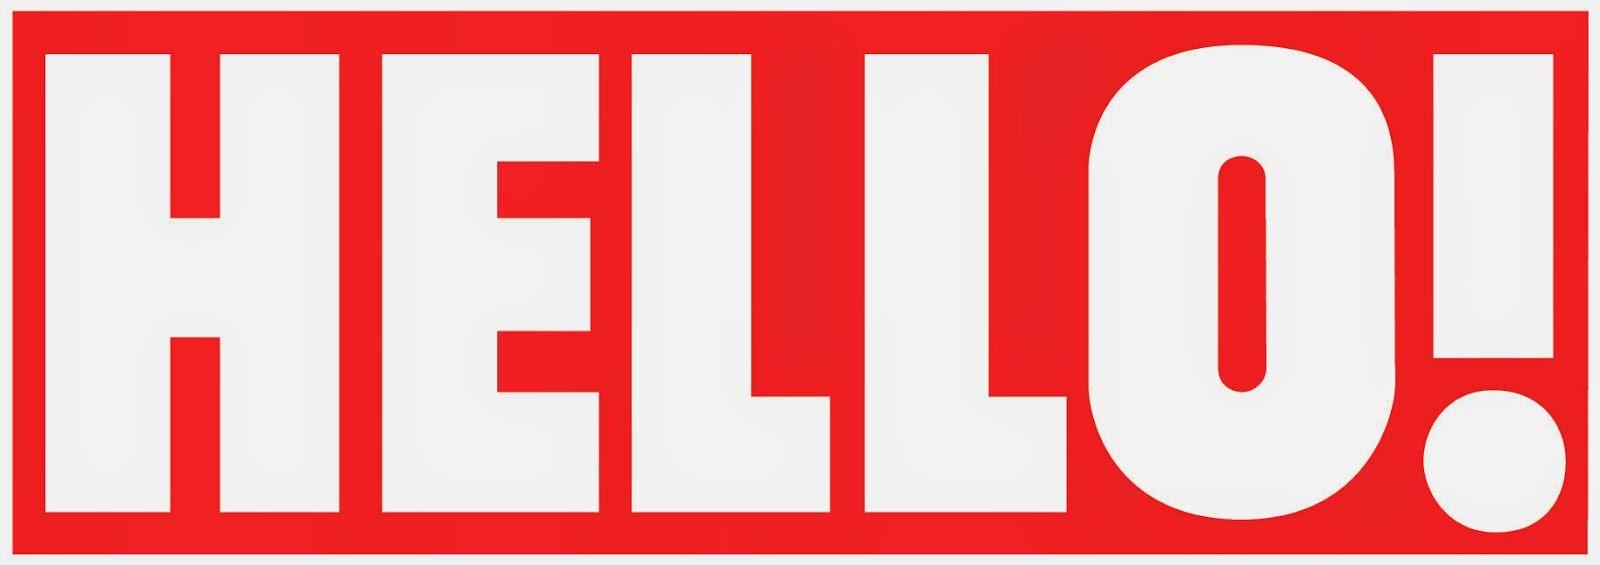 Magazines Logo - Tegan's IMD4005 Log: How a Magazine Logo Defines it's Content